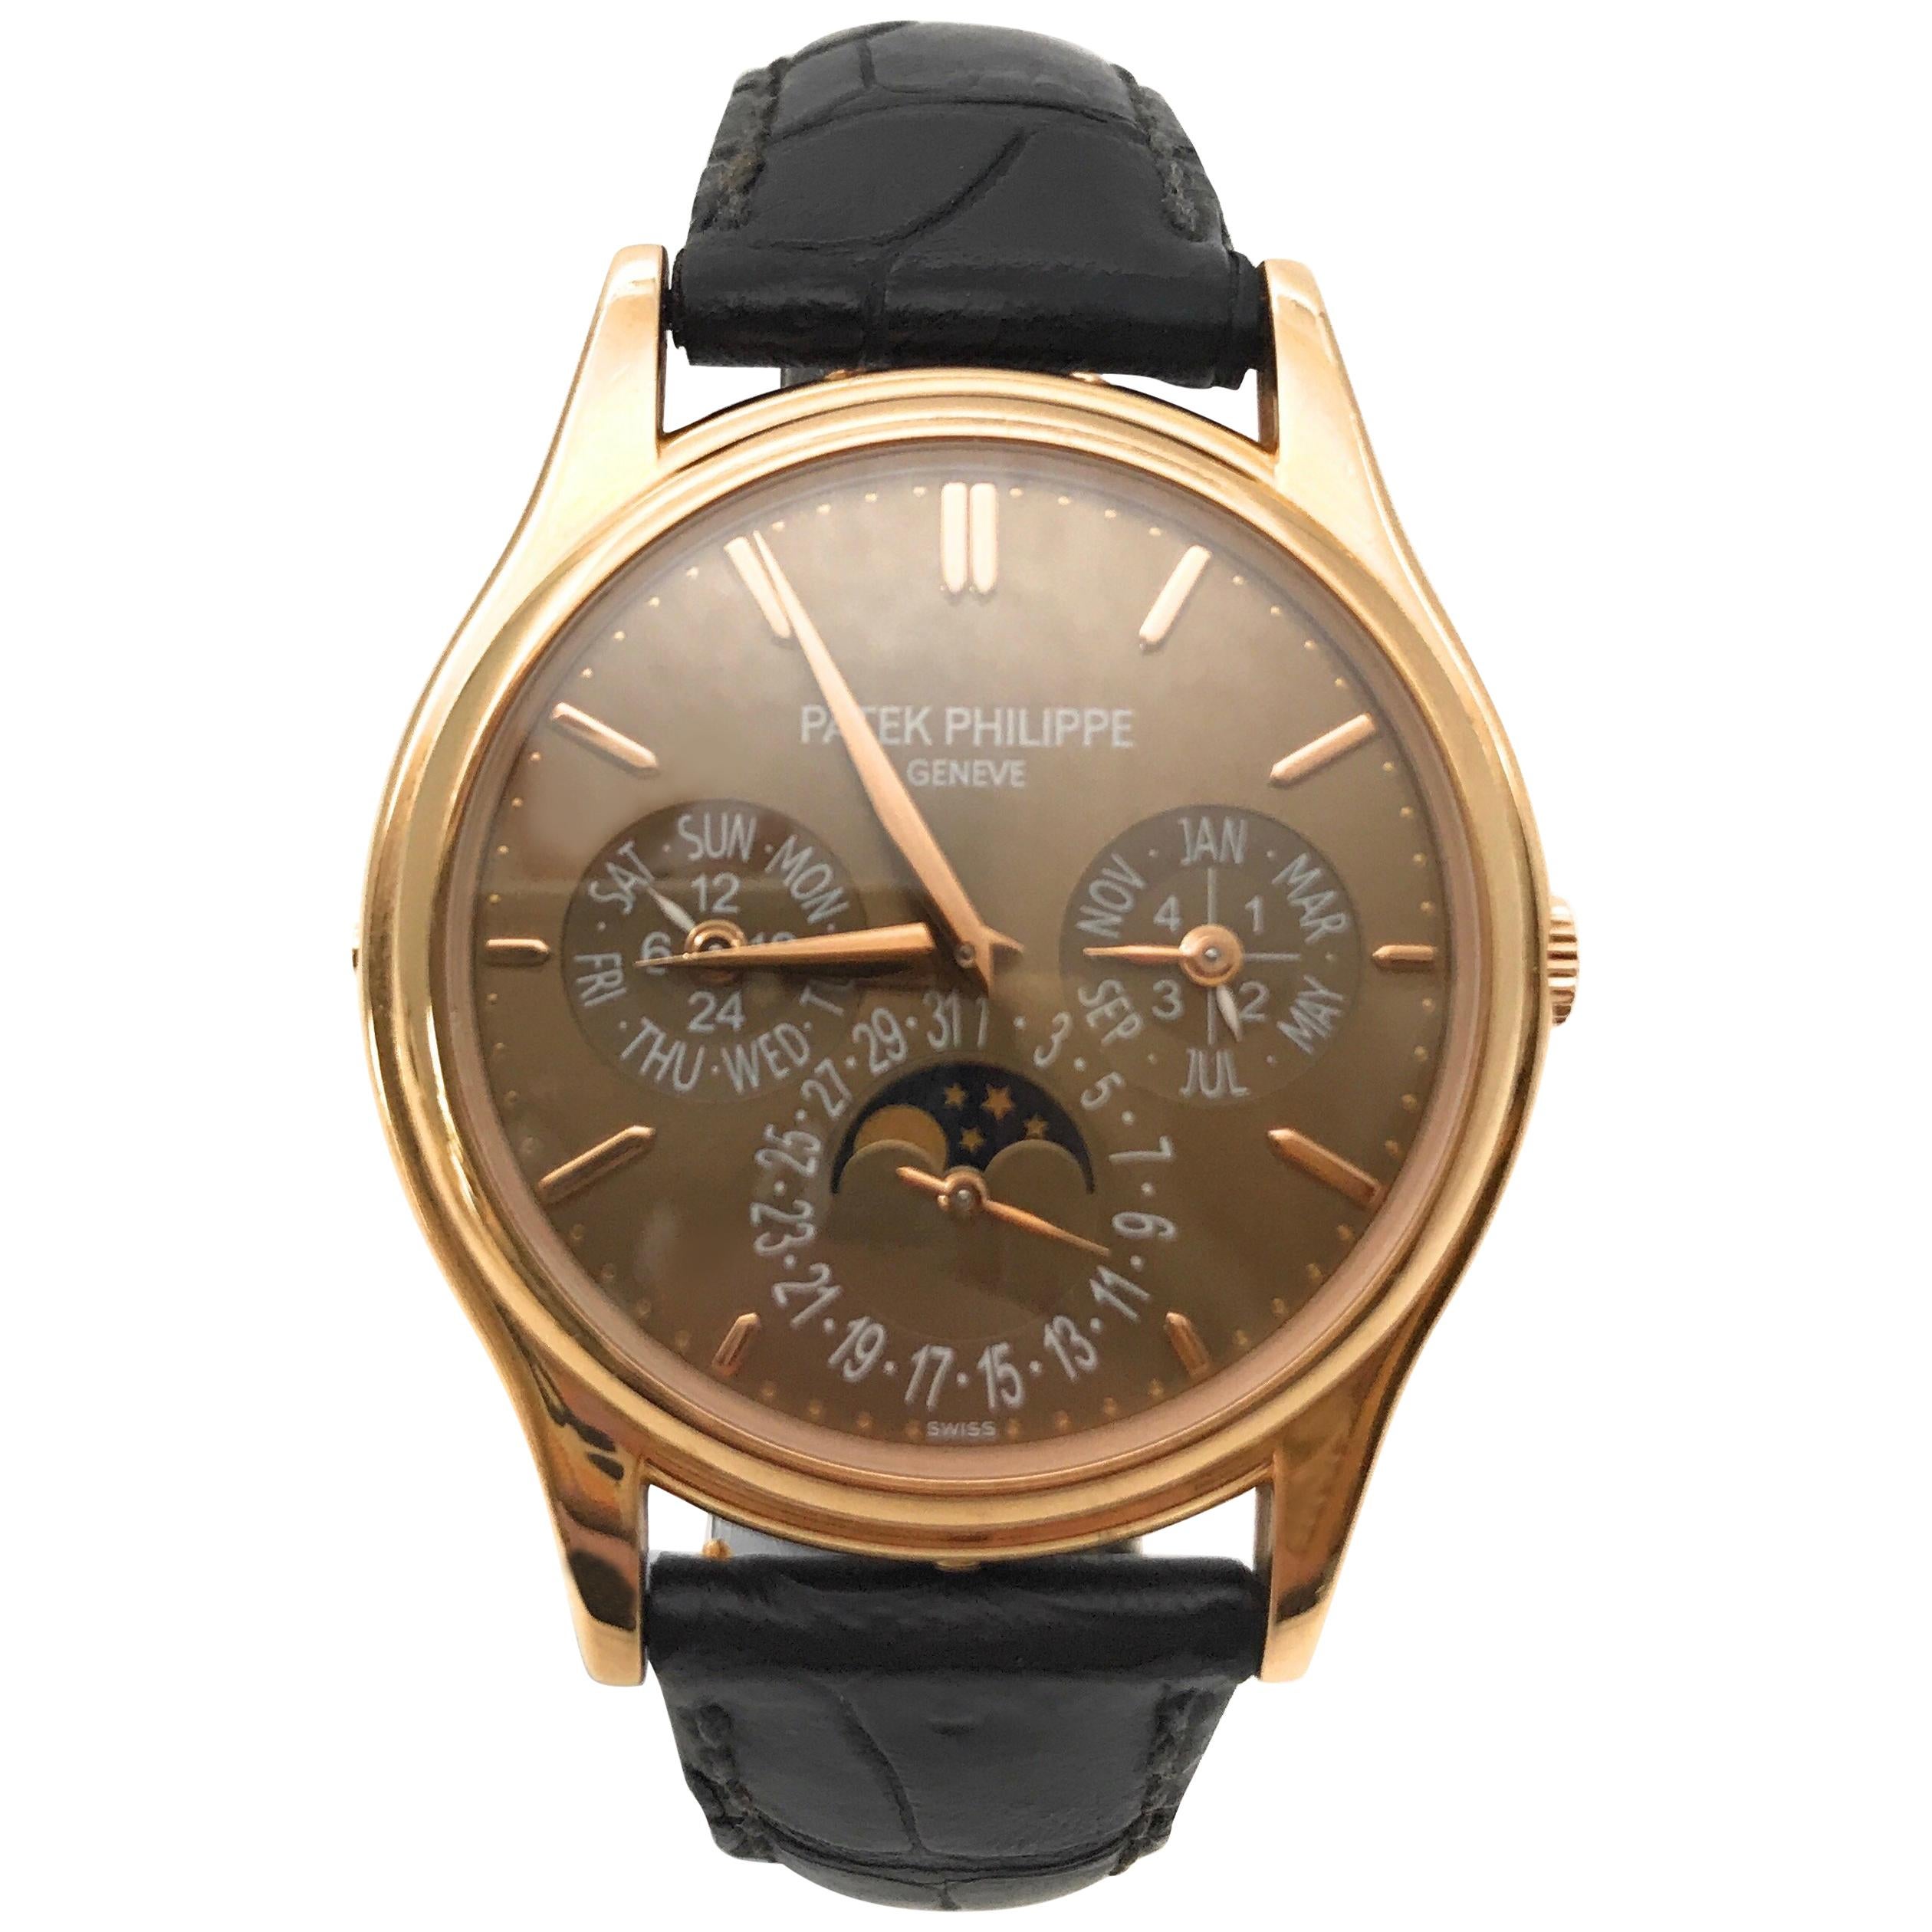 Patek Philippe 5140R Grand Complications Perpetual Calendar Watch For Sale